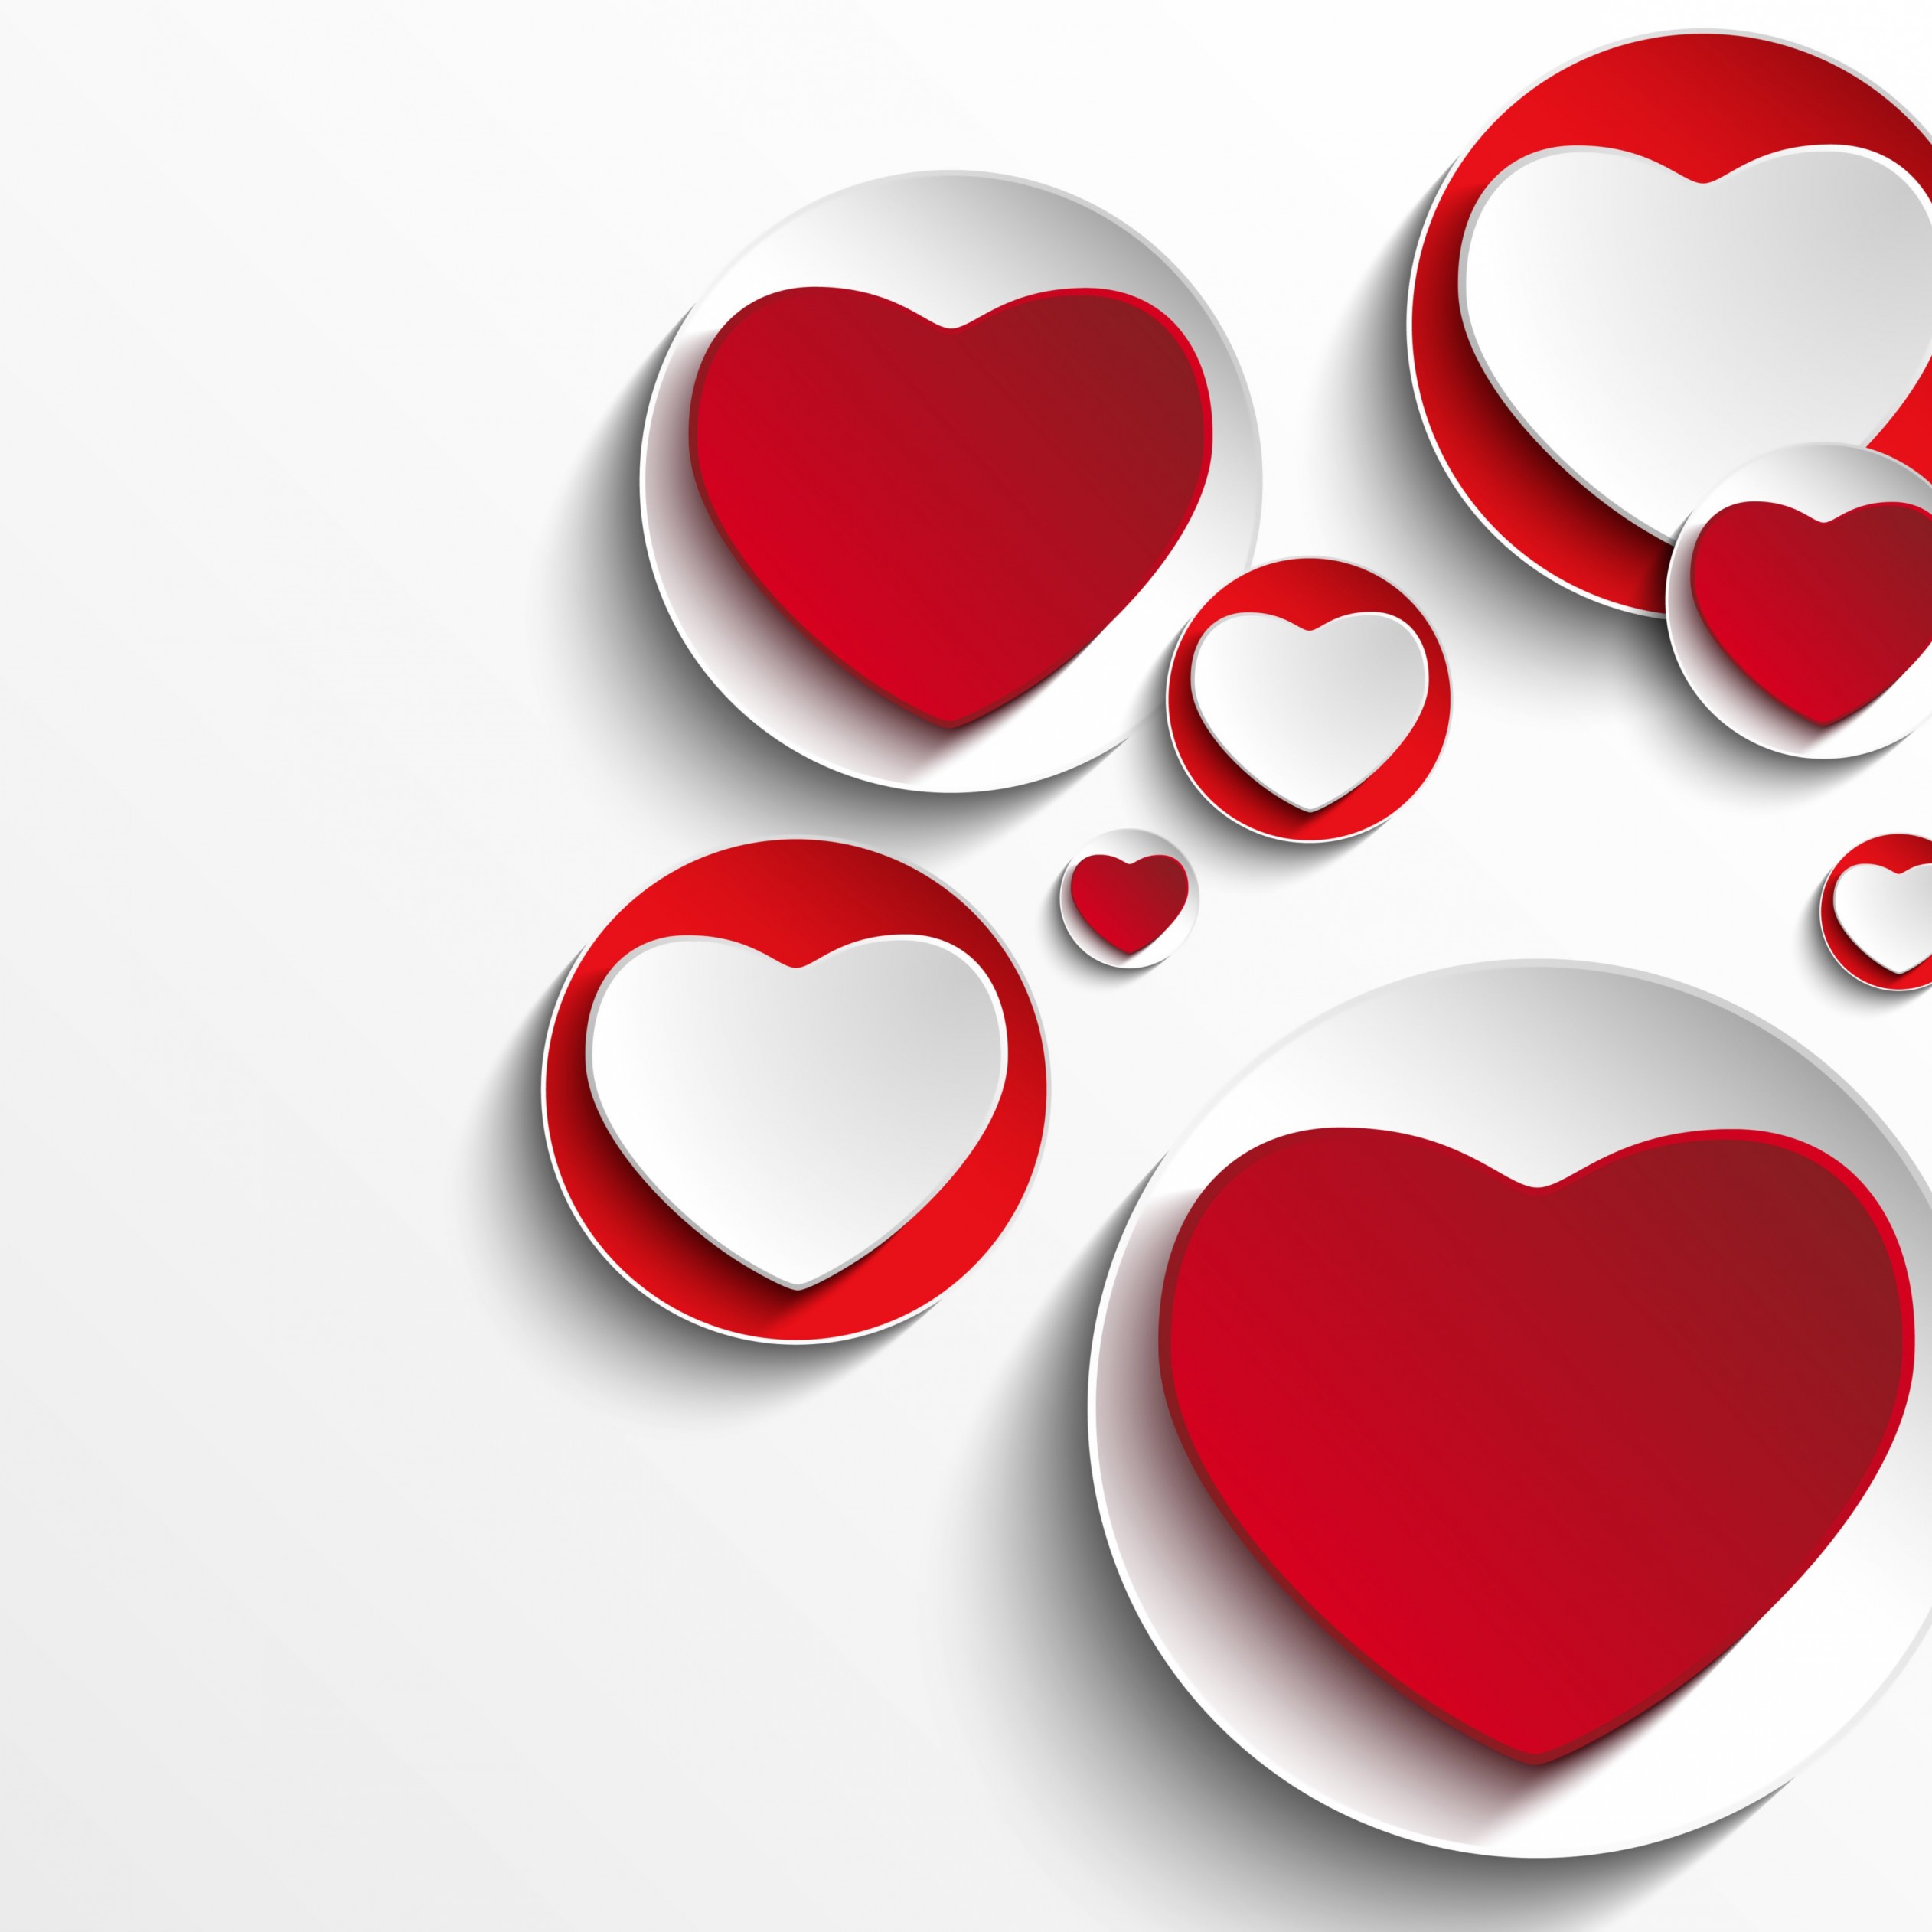 Minimalistic Hearts Shapes Wallpaper for Apple iPad Air